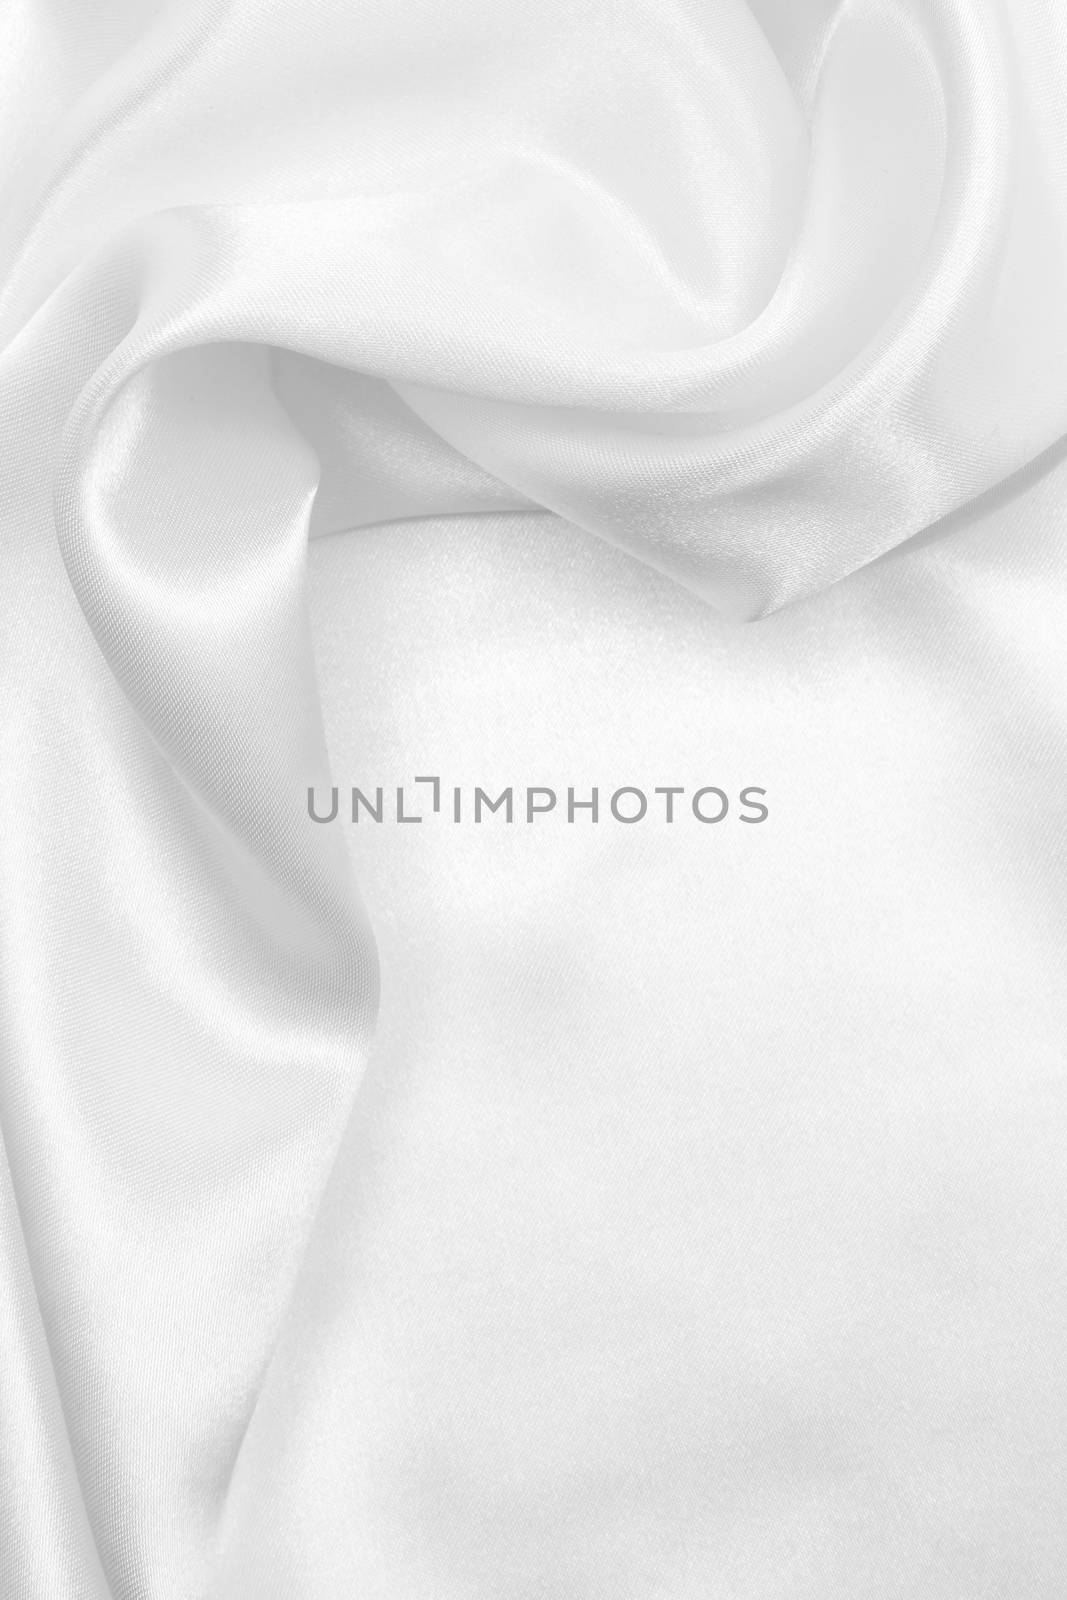 Smooth elegant white silk as background  by oxanatravel